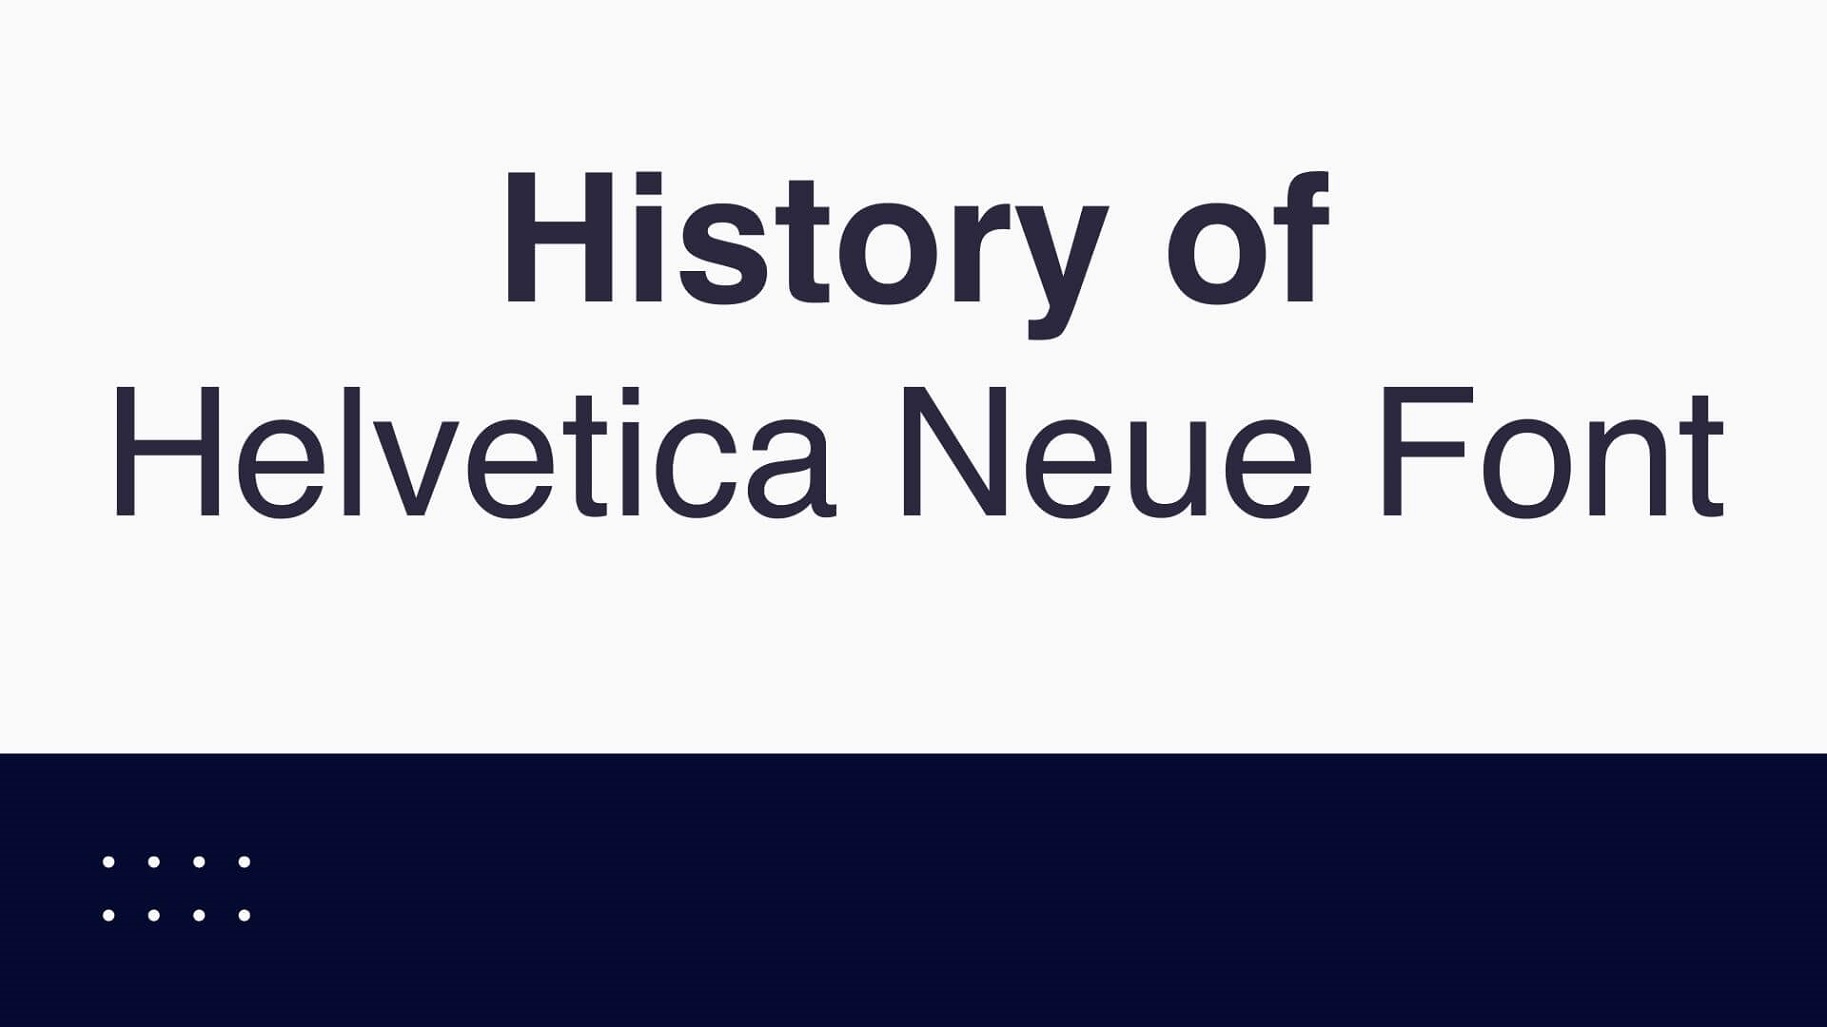 History of Helvetica Neue Font